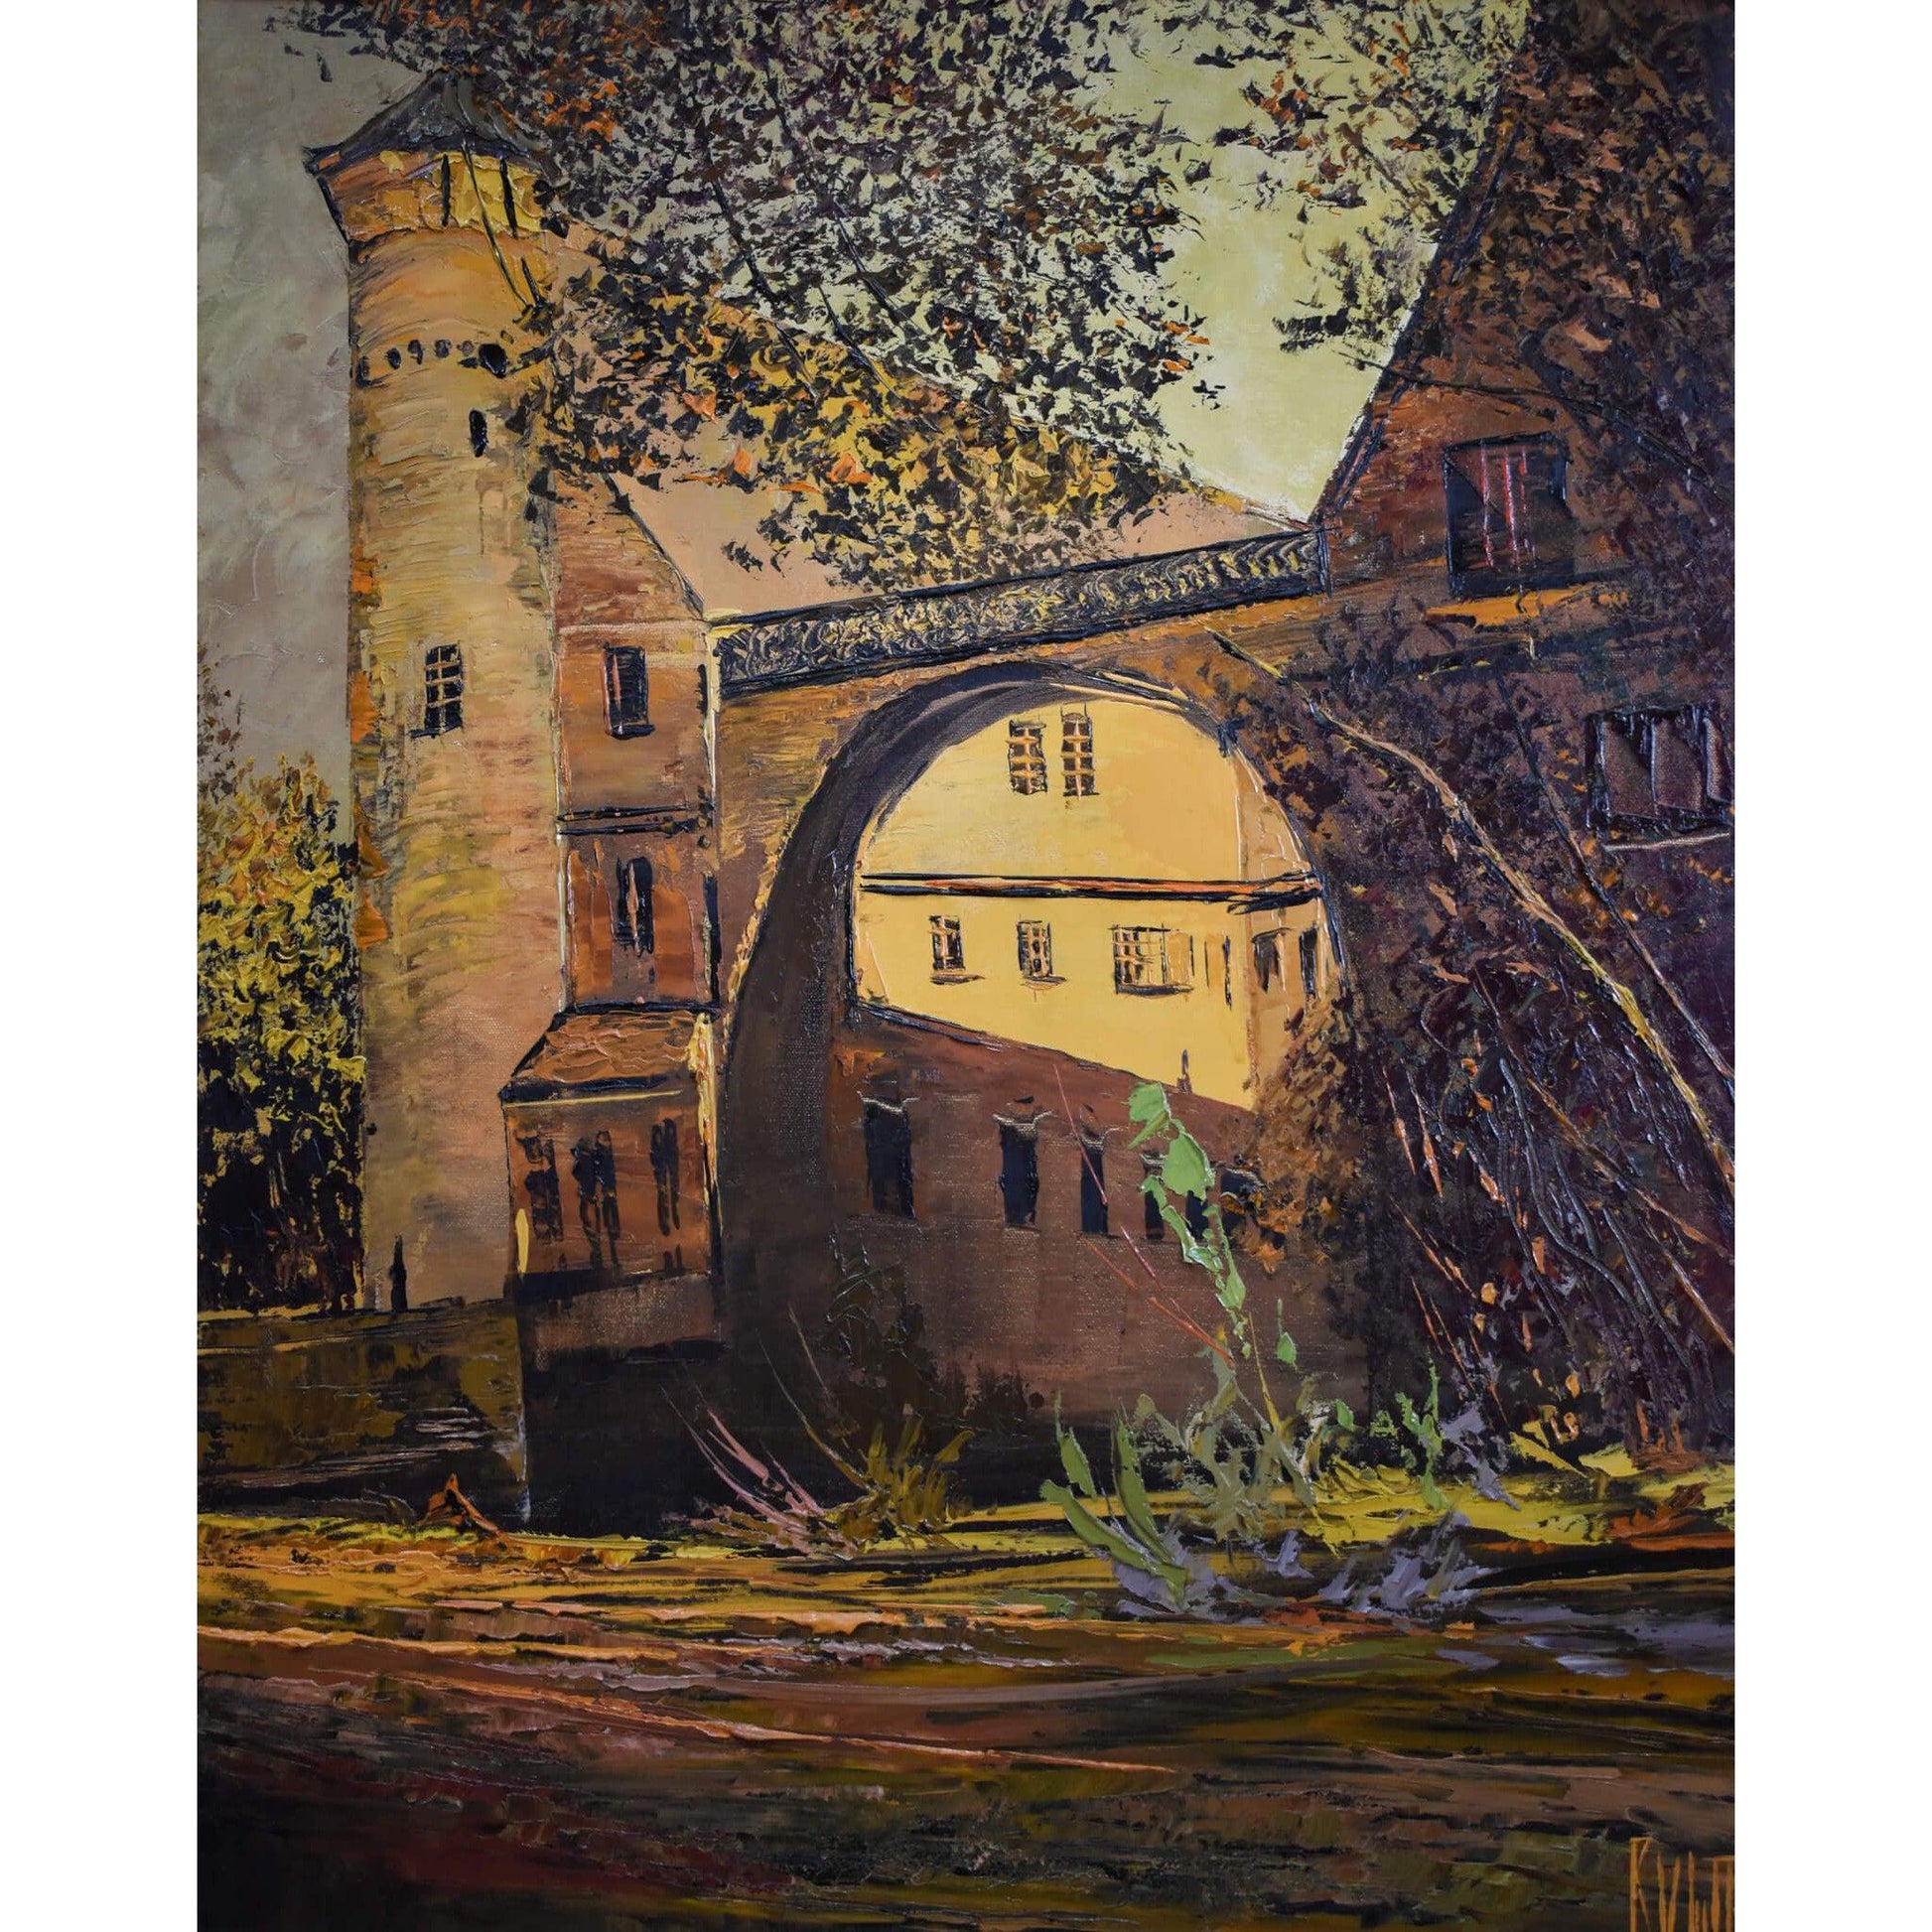 Vintage landscape oil painting, Furstenau castle view circa 1970, by Otto Rut, for sale at Winckelmann Gallery